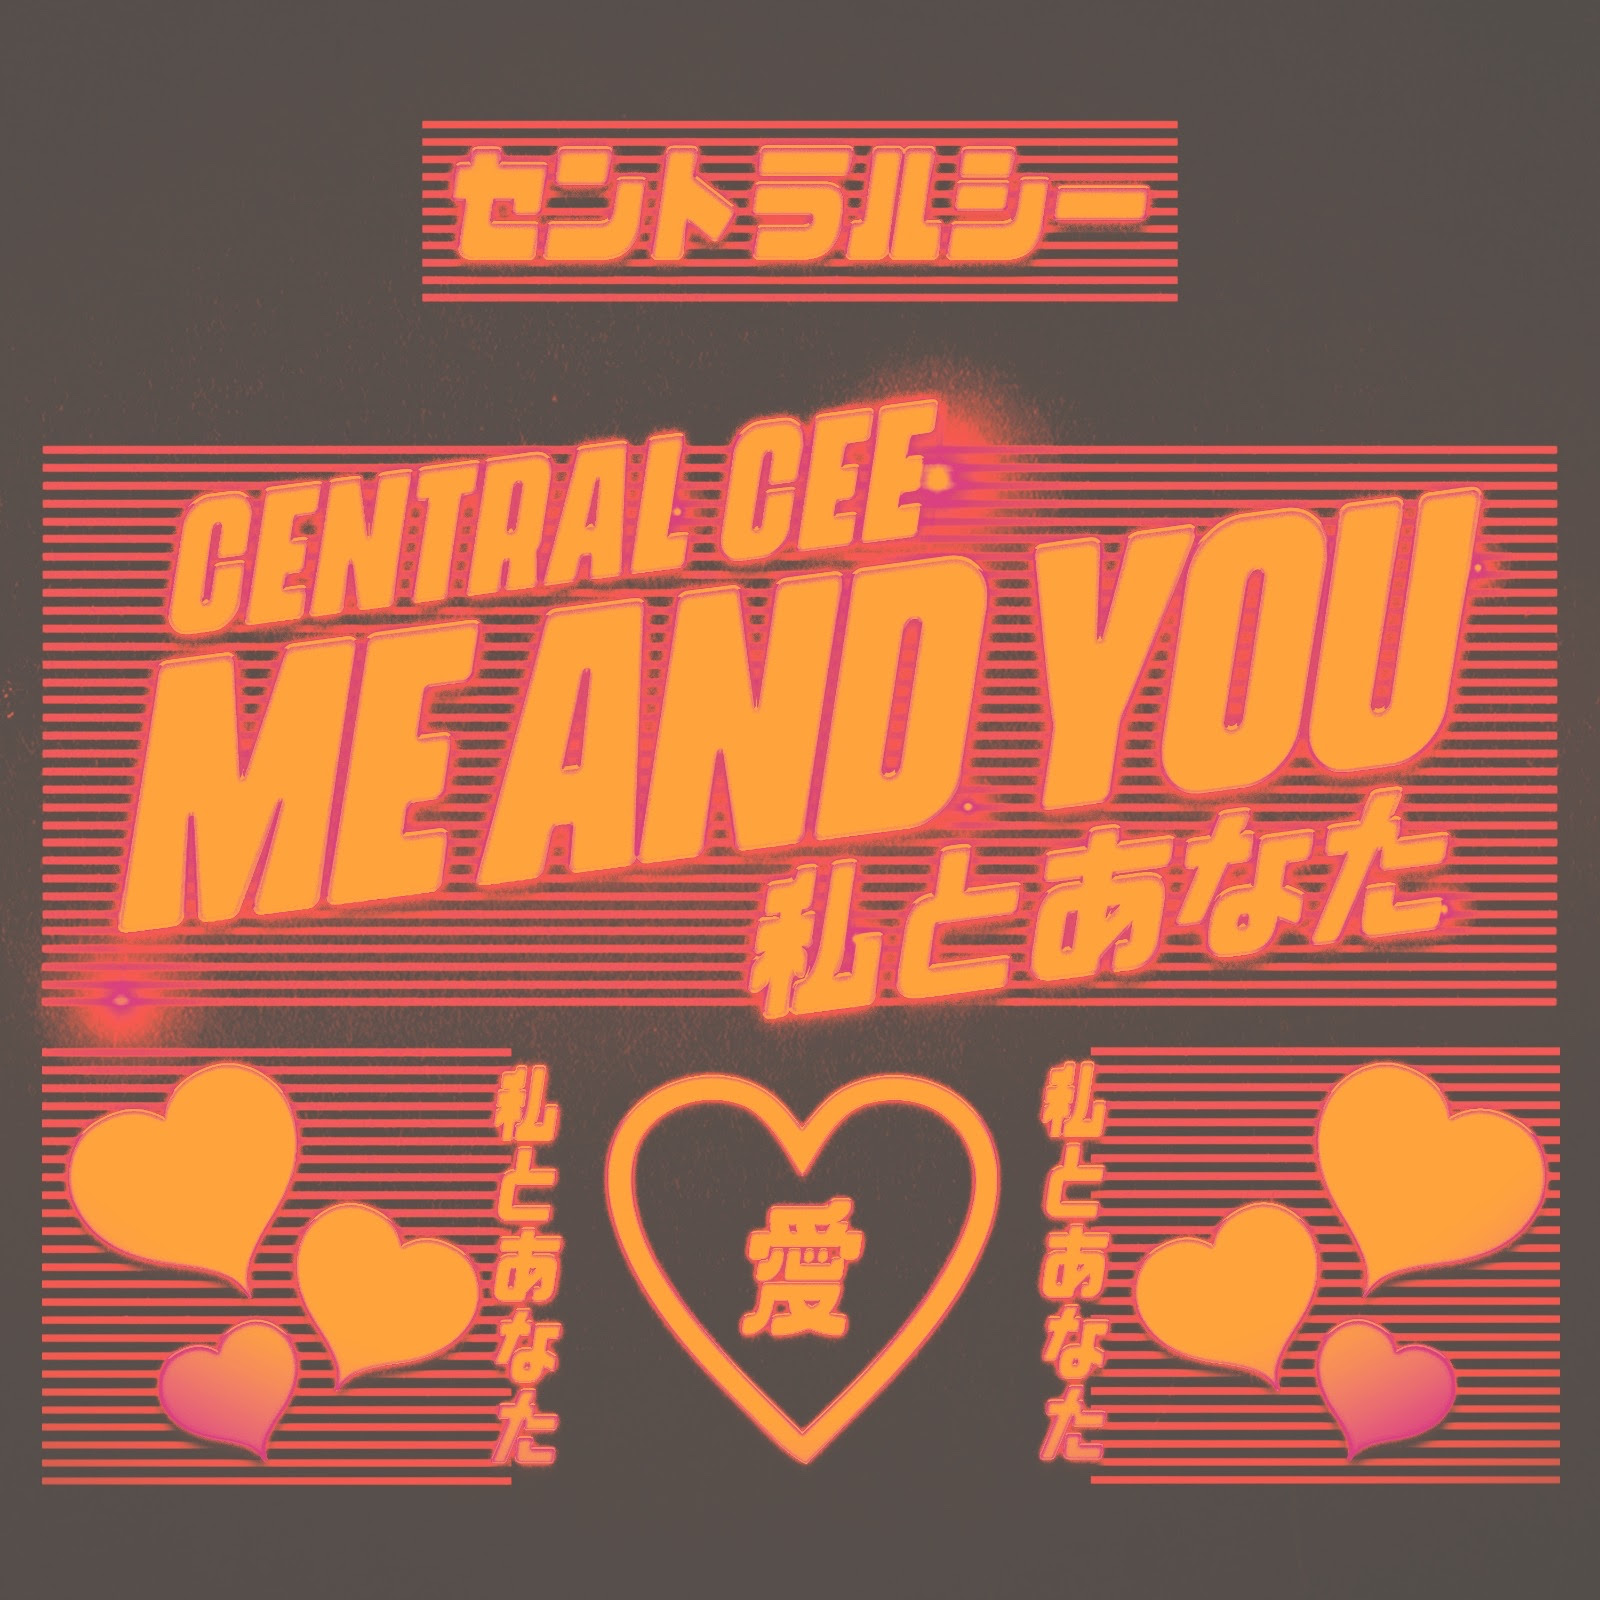 Central Cee Drops Doja Single + Cole Bennett-Directed Video - Audible  Treats